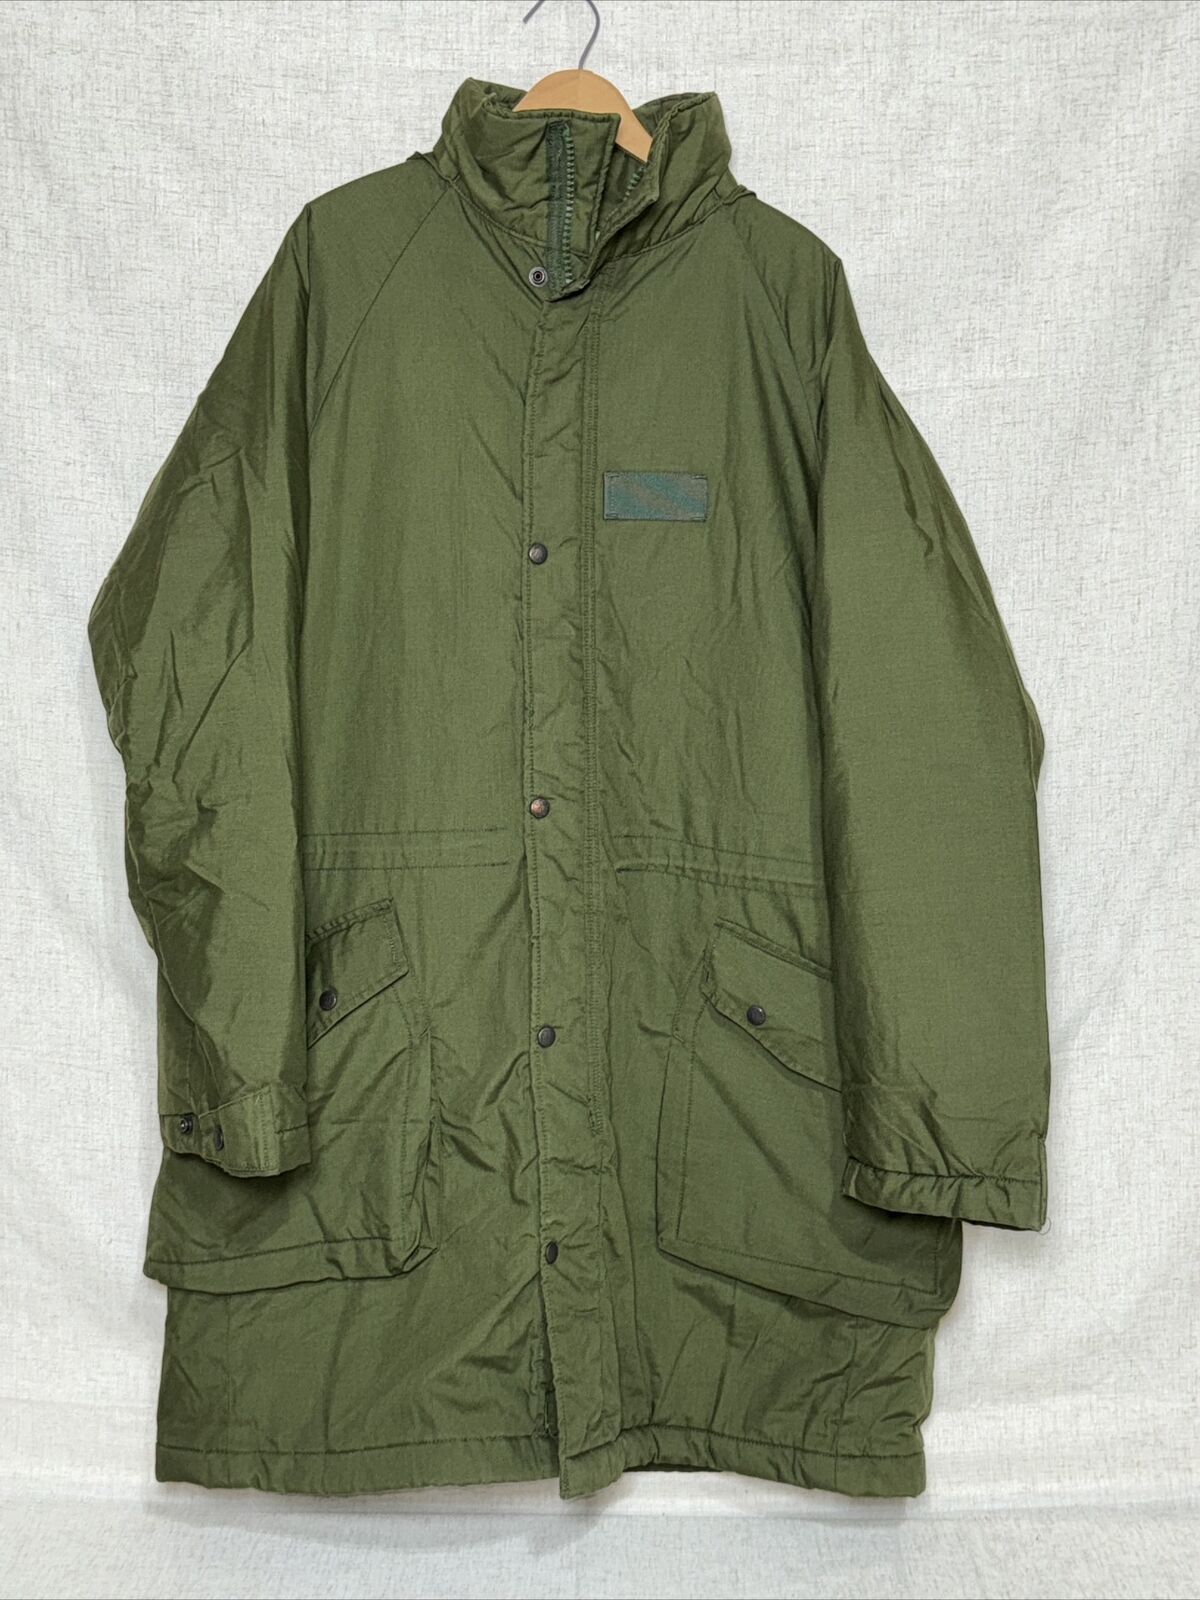 VTG Swedish Army 1998 Coat 190 / 70 Cold Weather Parka Green Hood M7360-020000-3